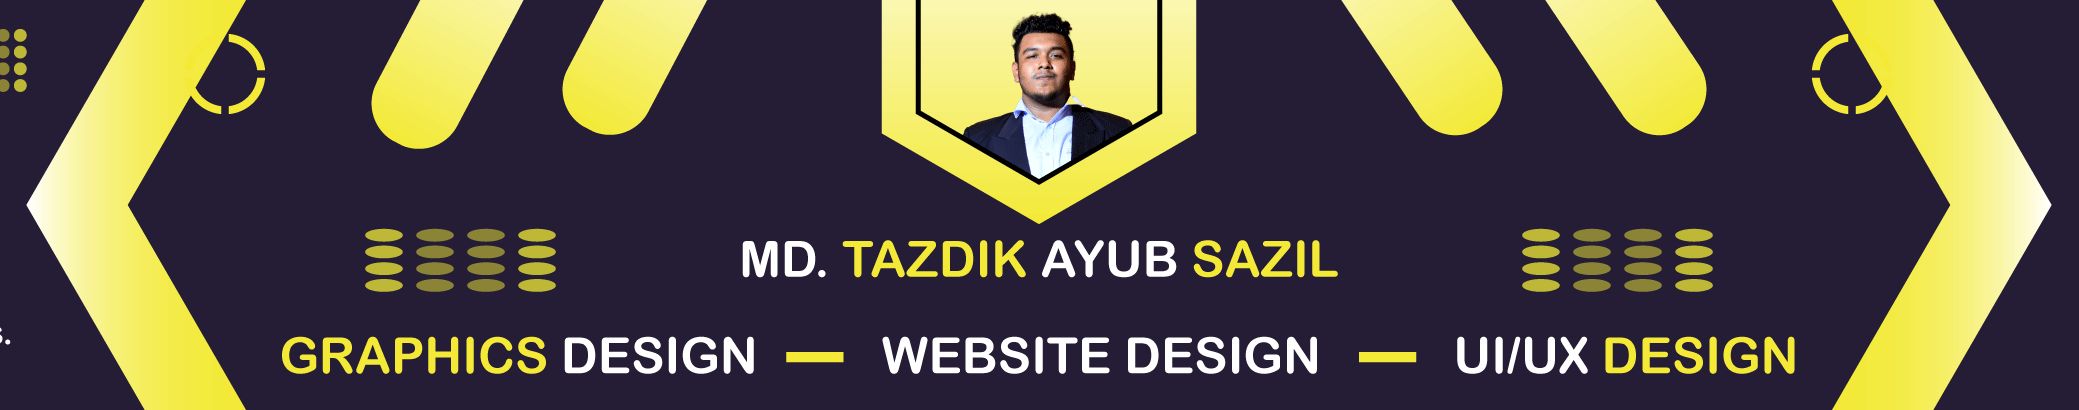 Bannière de profil de Tazdik Ayub Sazil